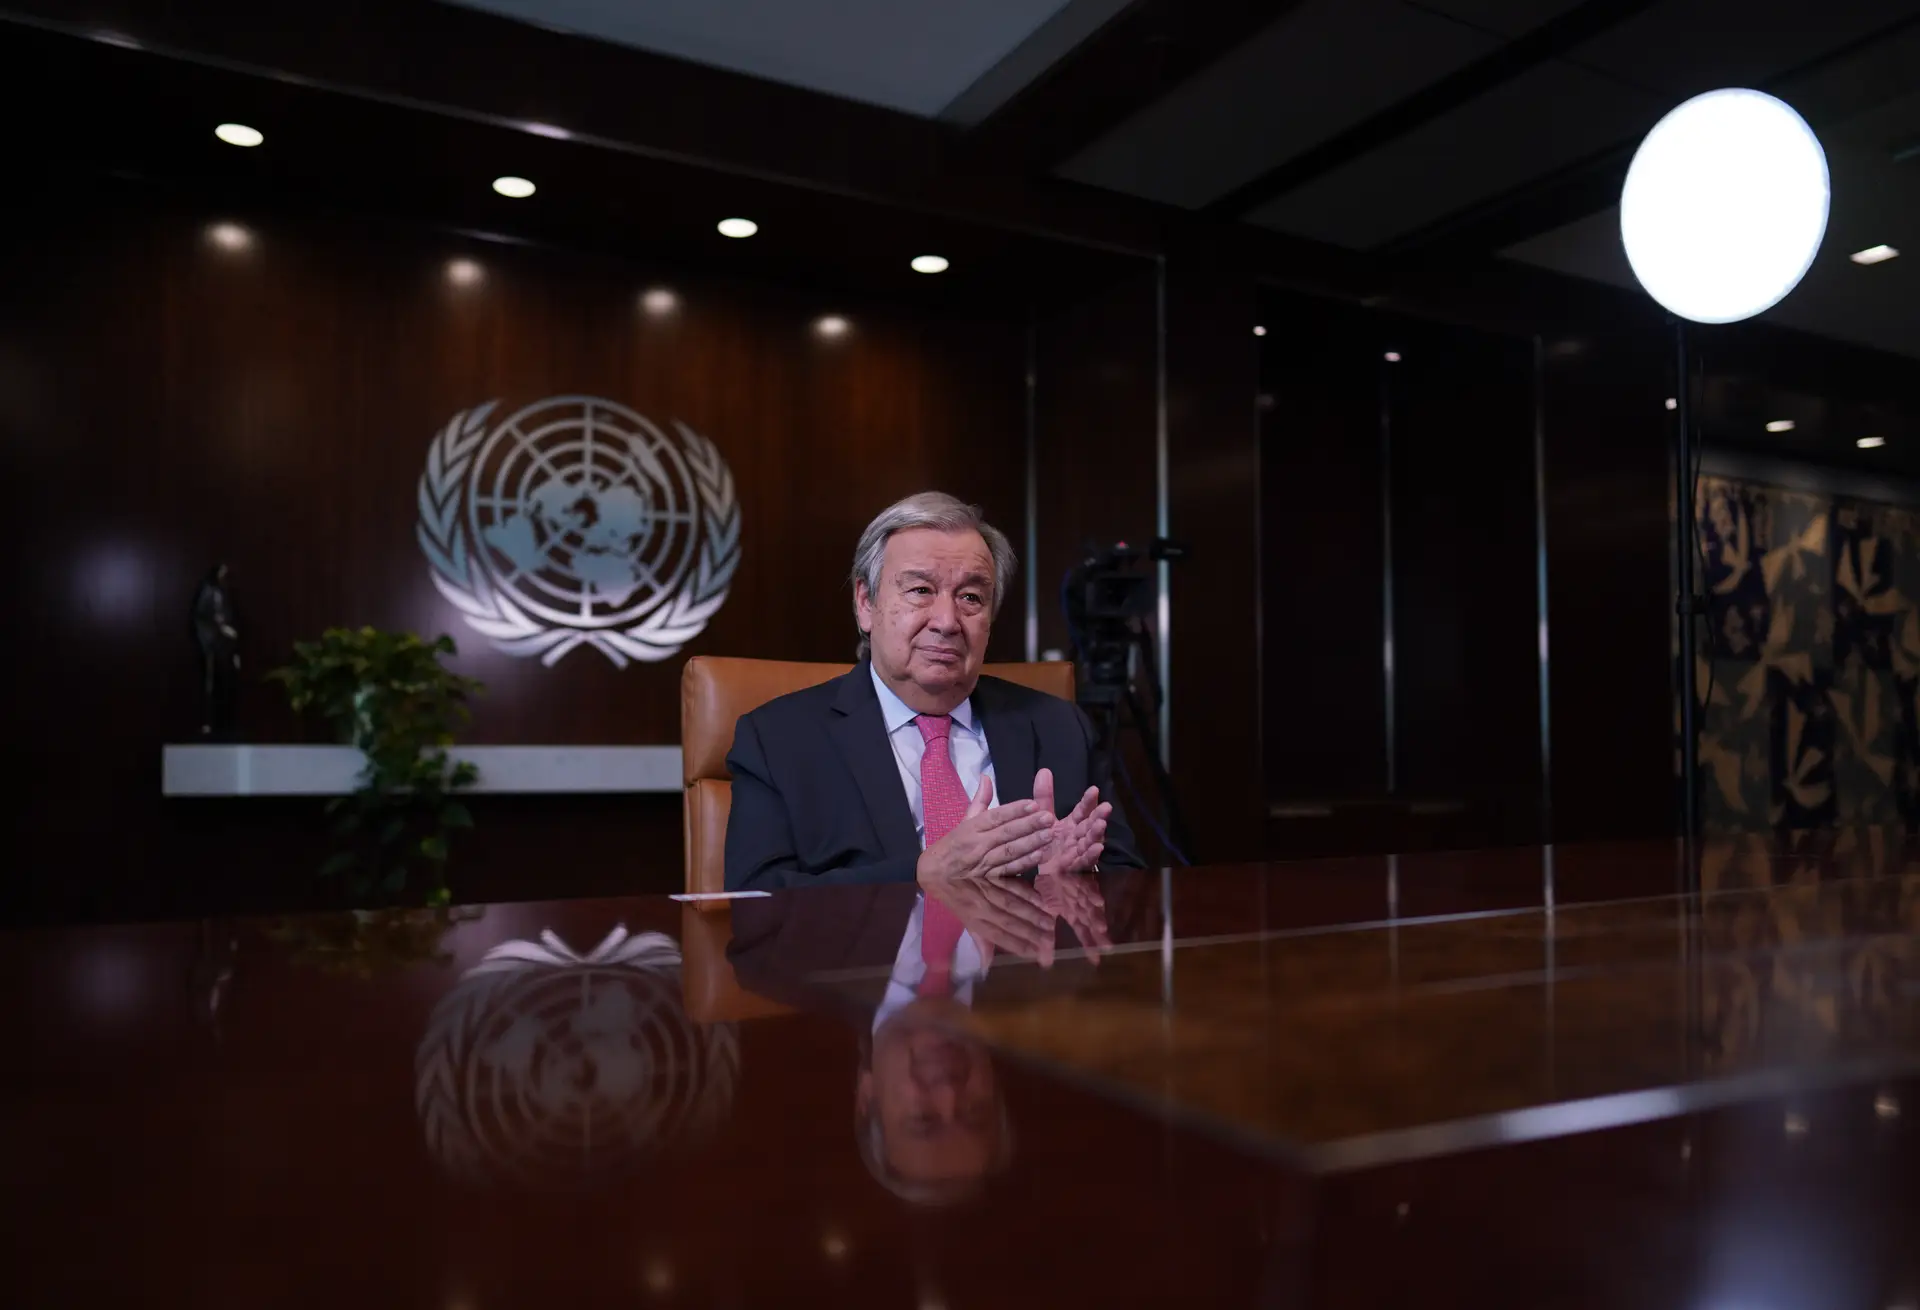 "O mais estúpido seria apostar no que nos levou ao desastre": o aviso de Guterres